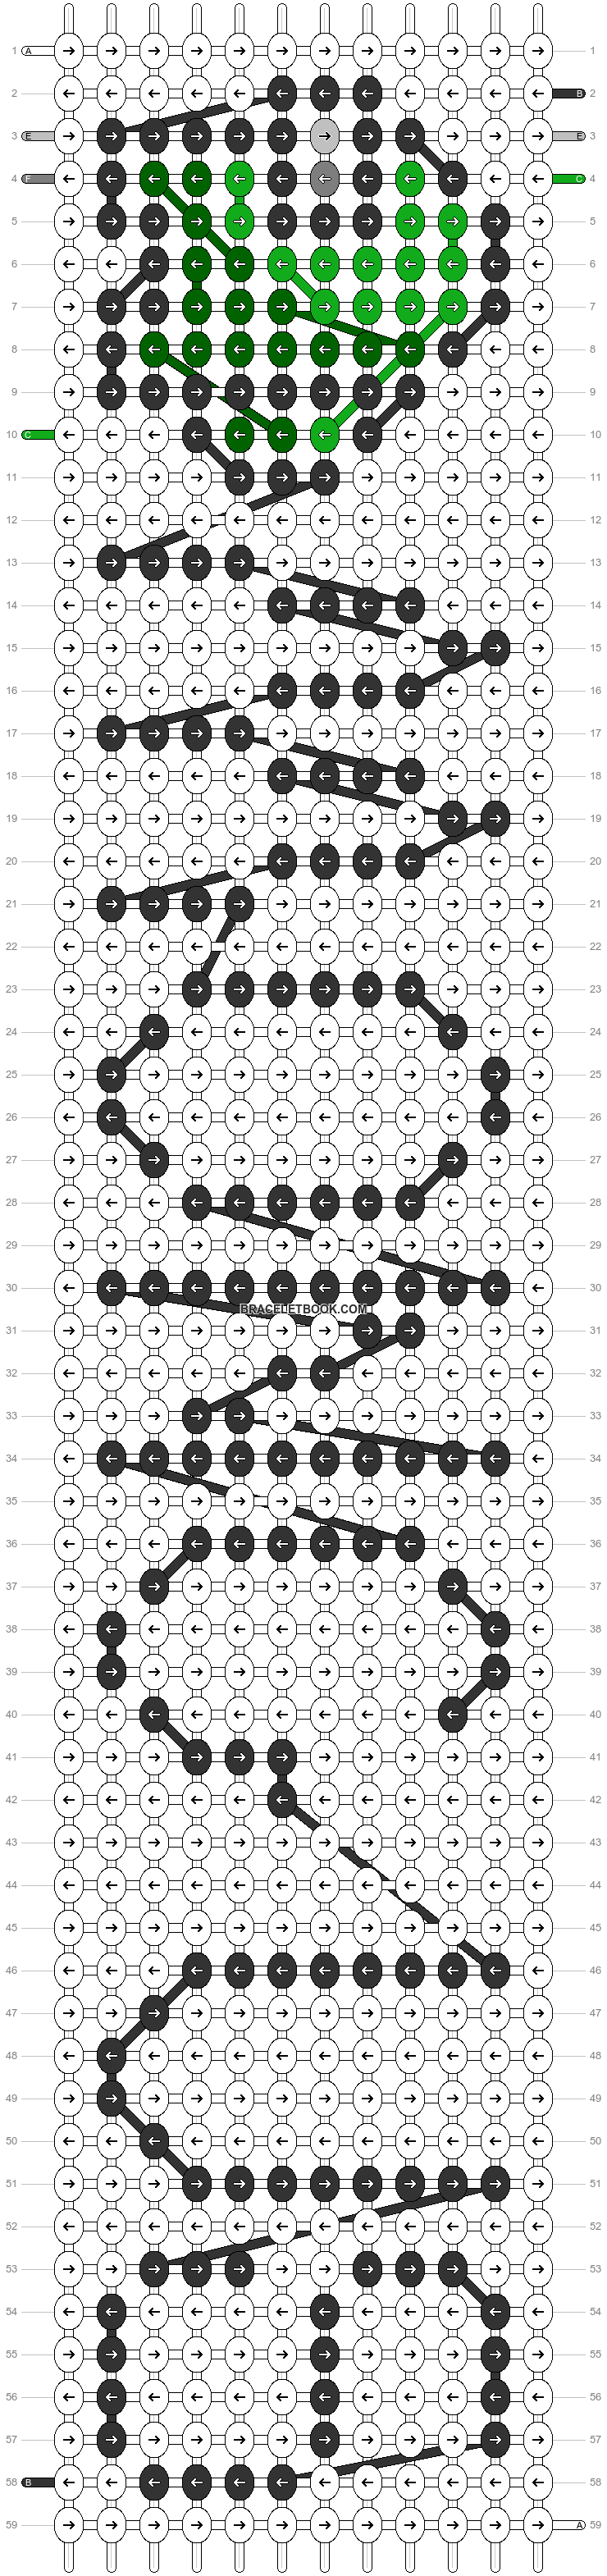 Alpha pattern #55655 variation #101820 pattern